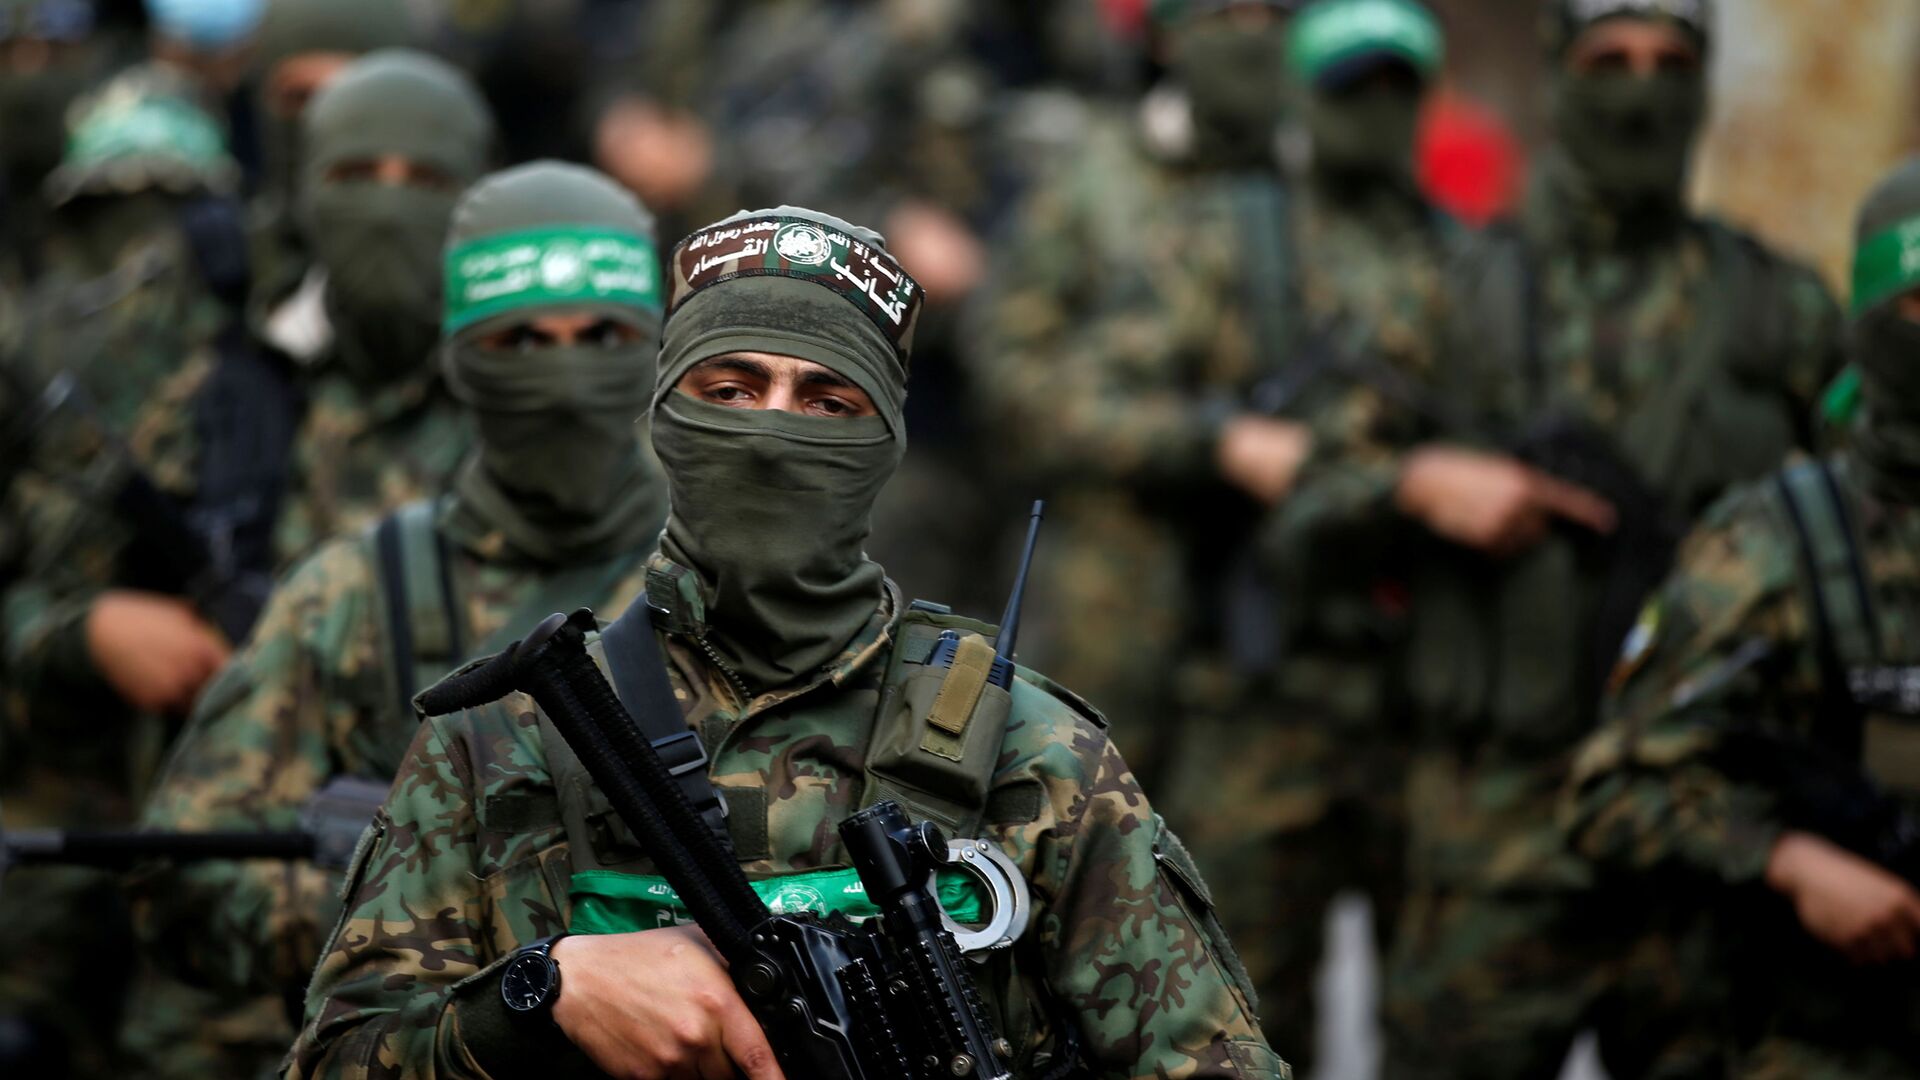 Palestinian Hamas militants take part in an anti-Israel rally in Gaza City May 22, 2021. REUTERS/Mohammed Salem - Sputnik International, 1920, 01.06.2021